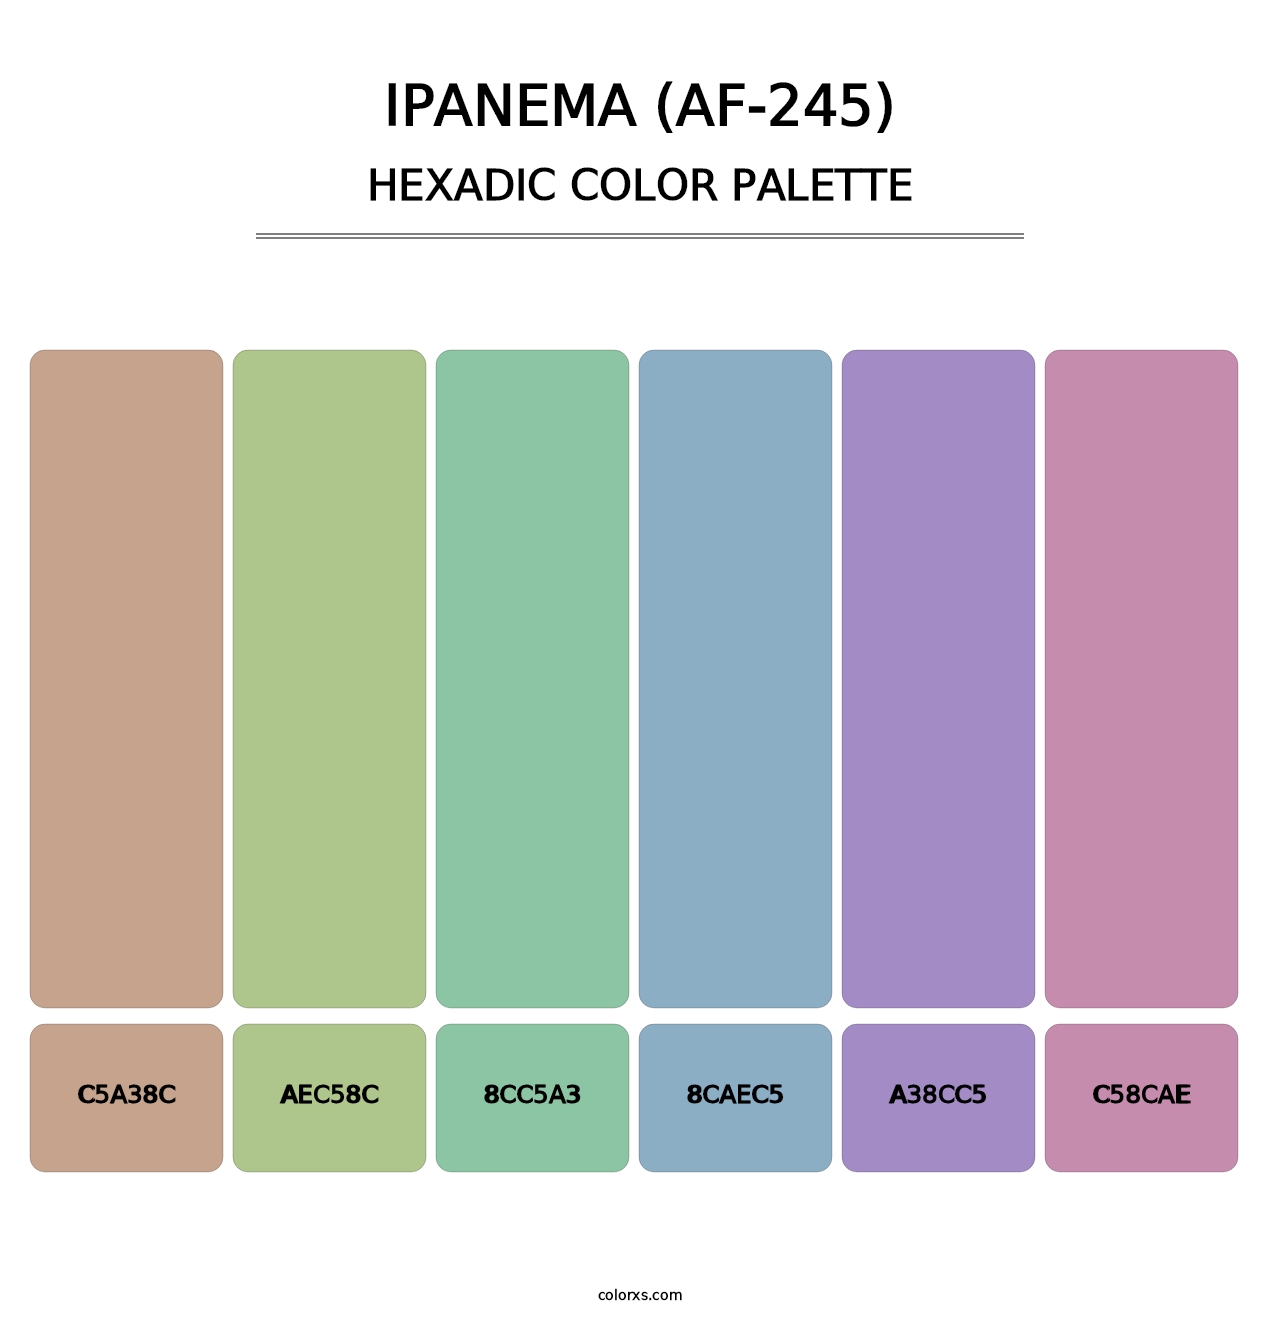 Ipanema (AF-245) - Hexadic Color Palette